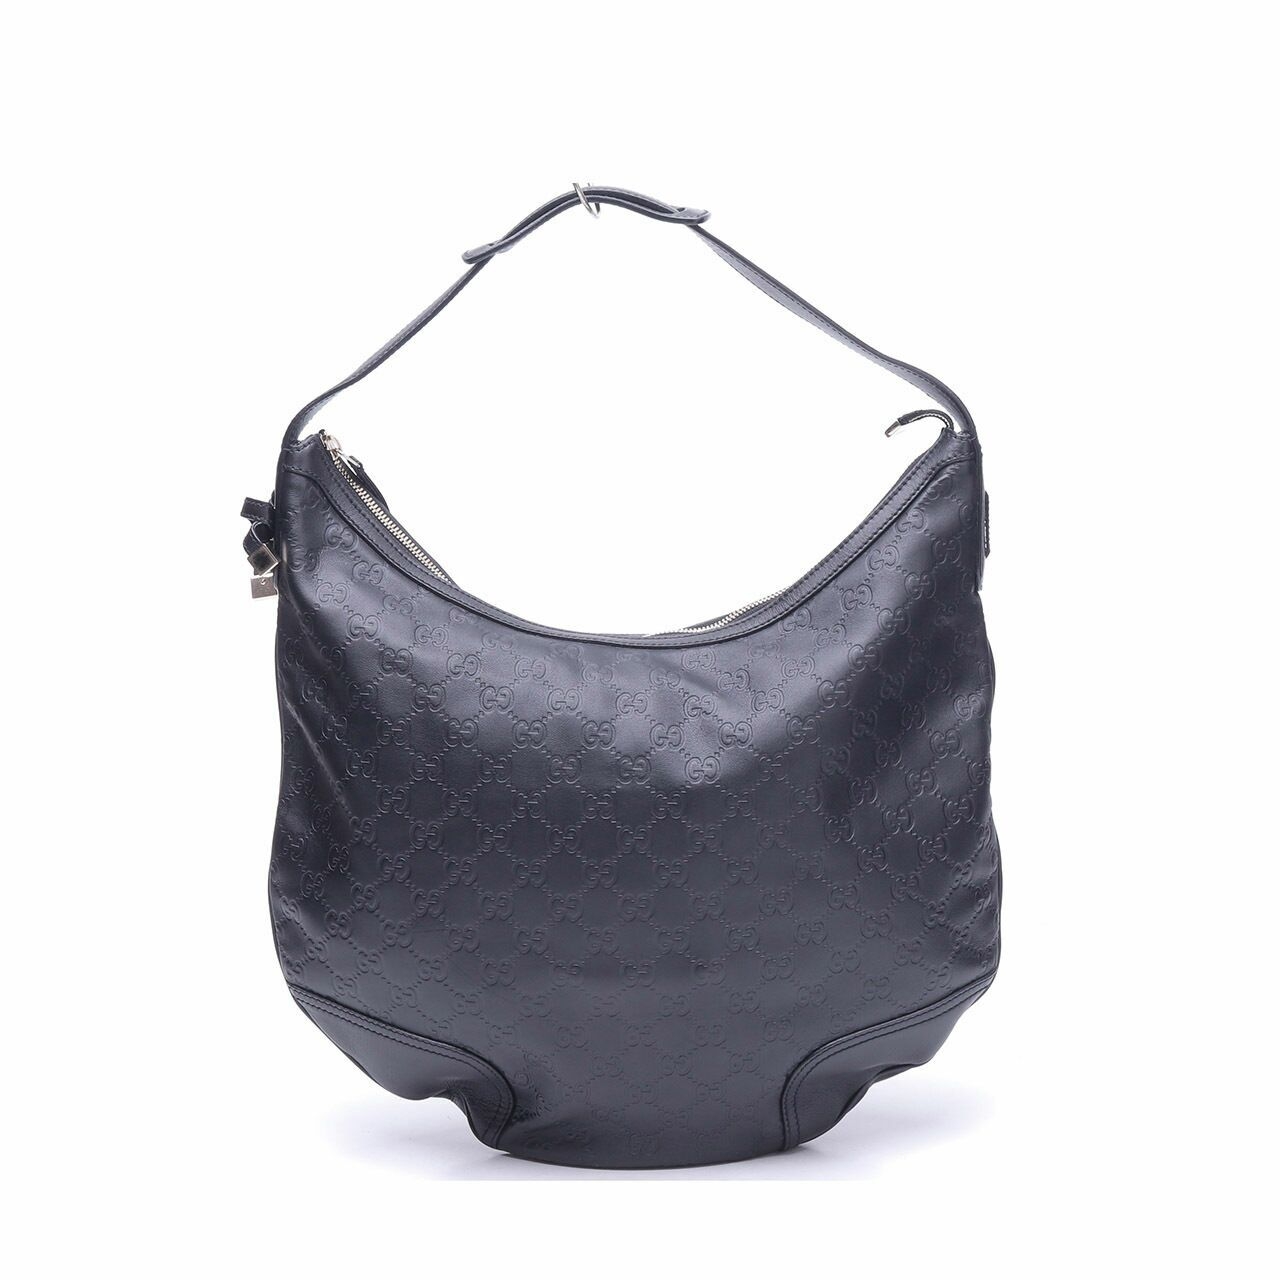 Gucci Princy Guccissima  Black Hobo Shoulder Bag